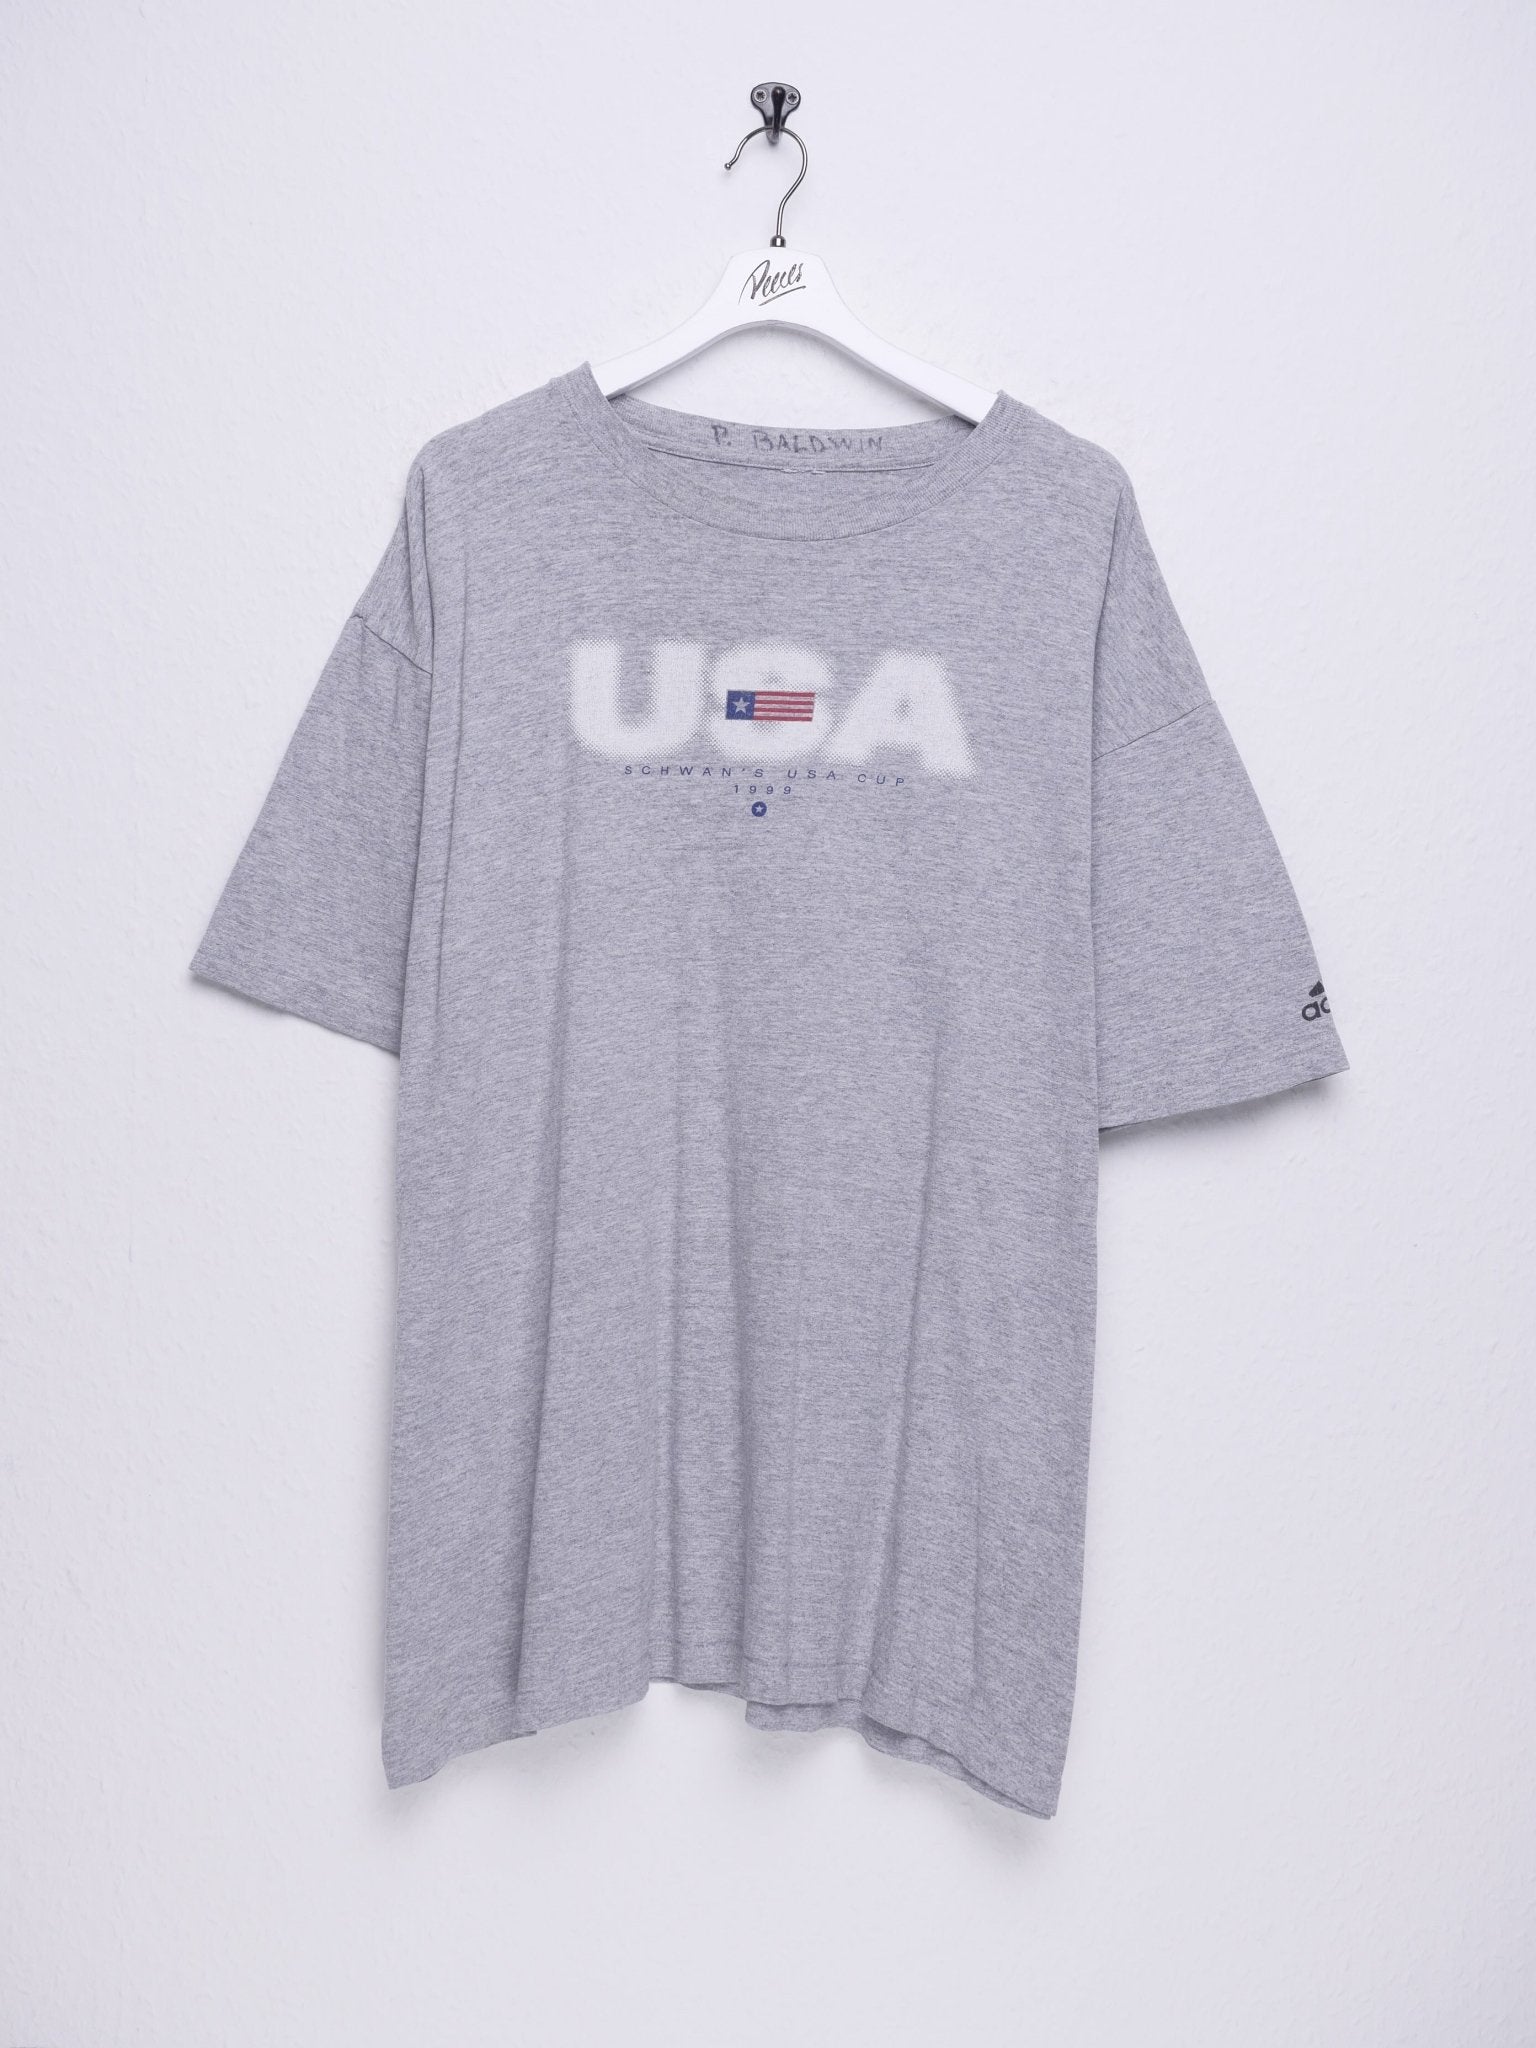 'Schwan's USA Cup 1999' printed Graphic grey Shirt - Peeces